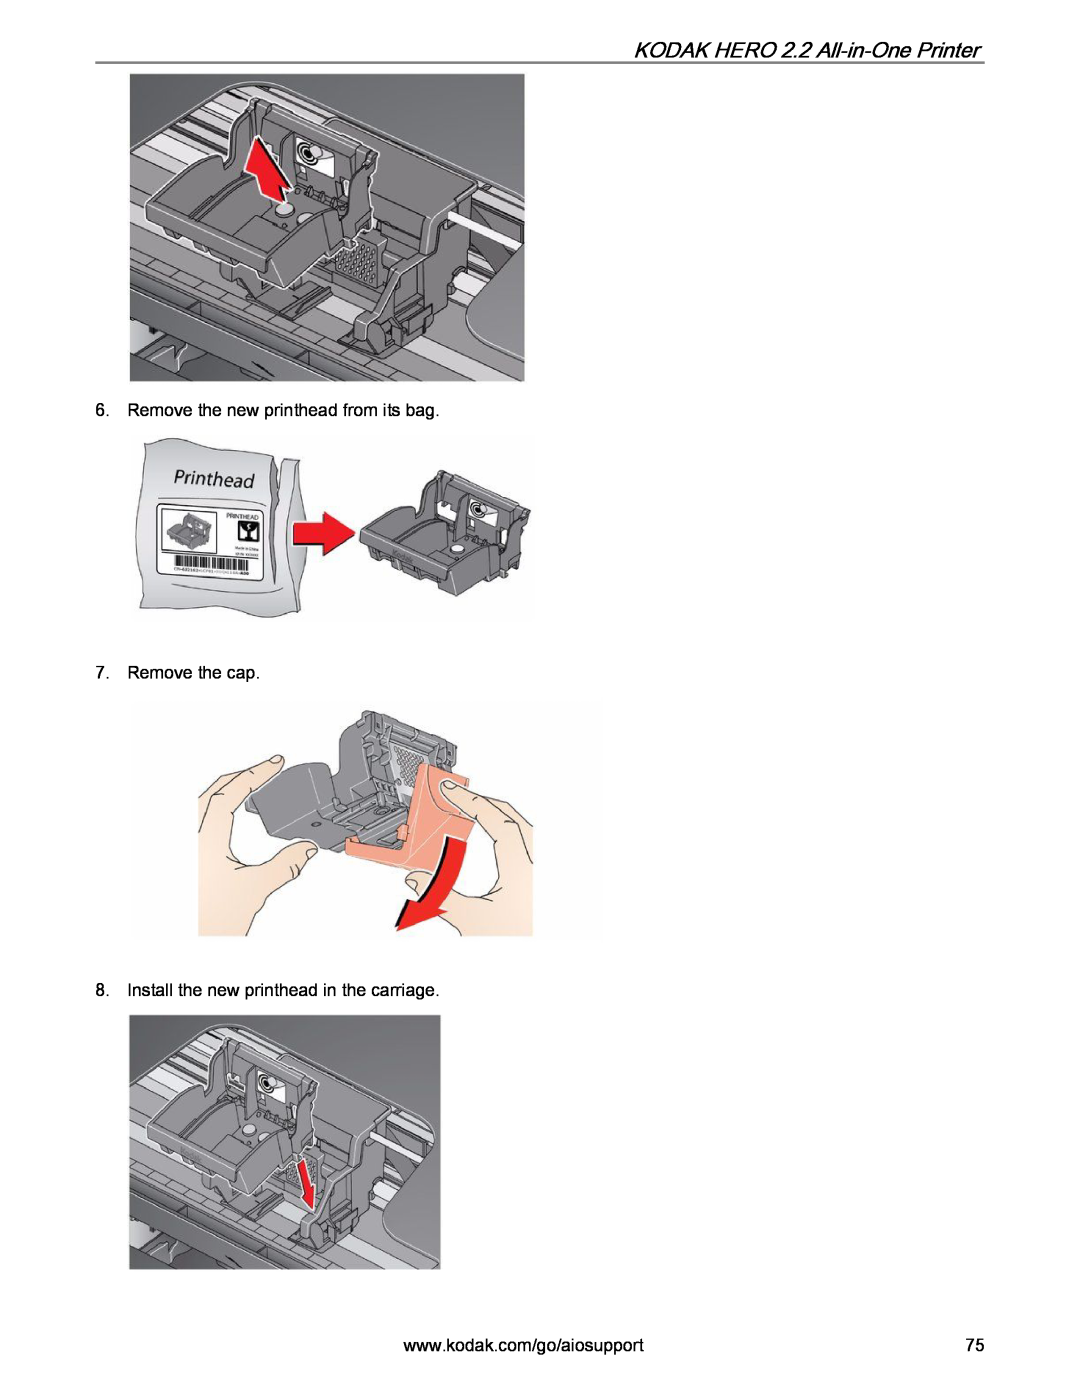 Kodak manual KODAK HERO 2.2 All-in-One Printer, Remove the new printhead from its bag 7. Remove the cap 